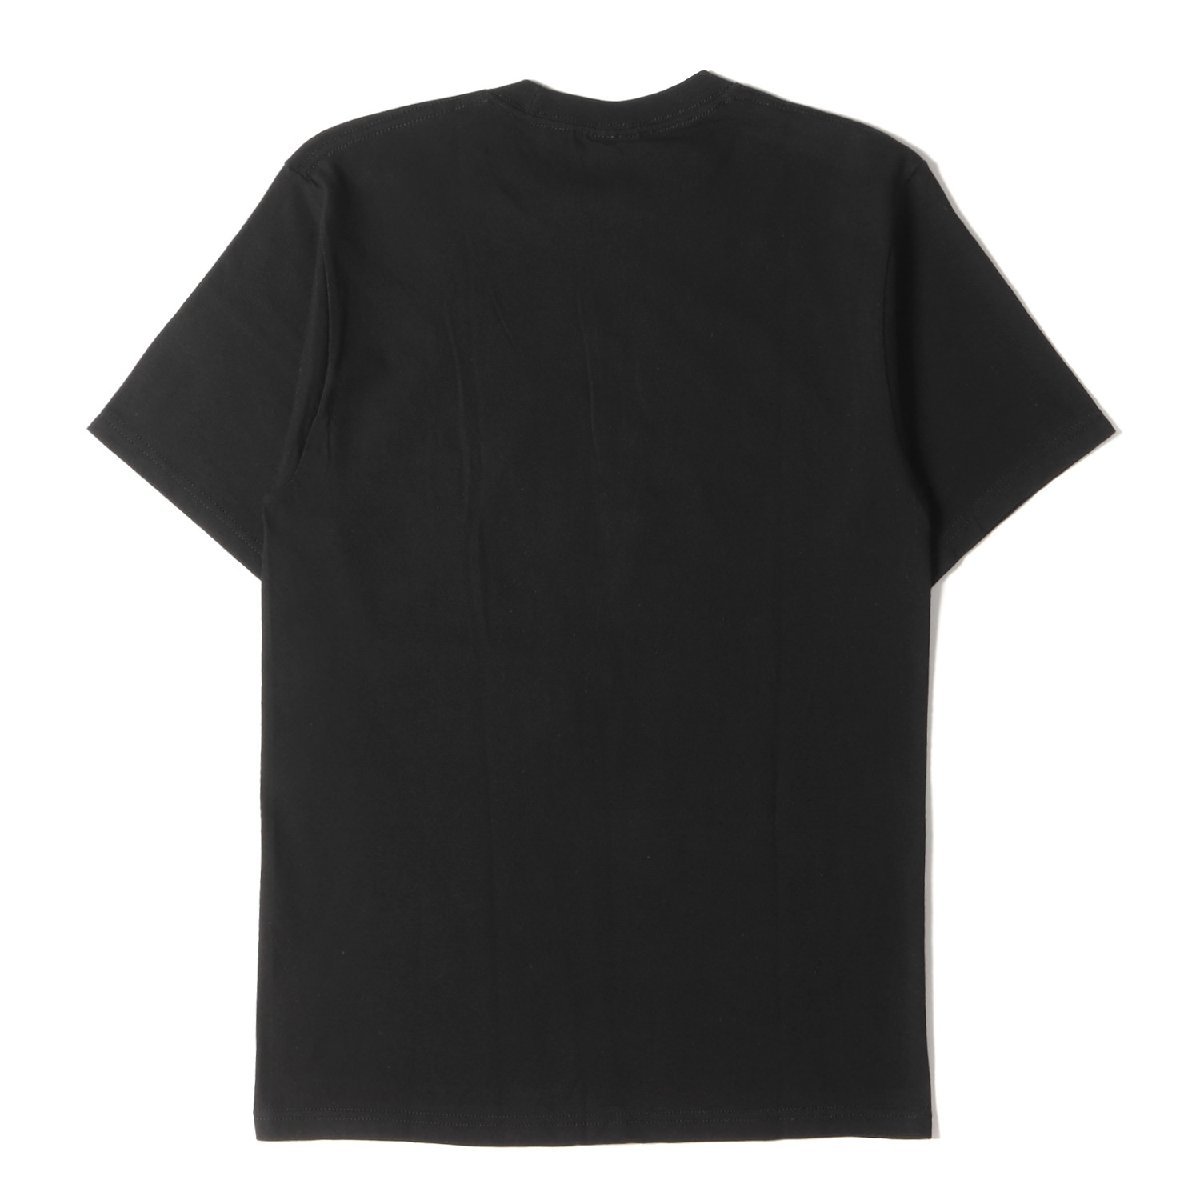 STUSSY ...  футболка   размер  :S ... ион   графика  ... гриф   короткие рукава   футболка   черный   черный   улица   брэнд   вершина ...